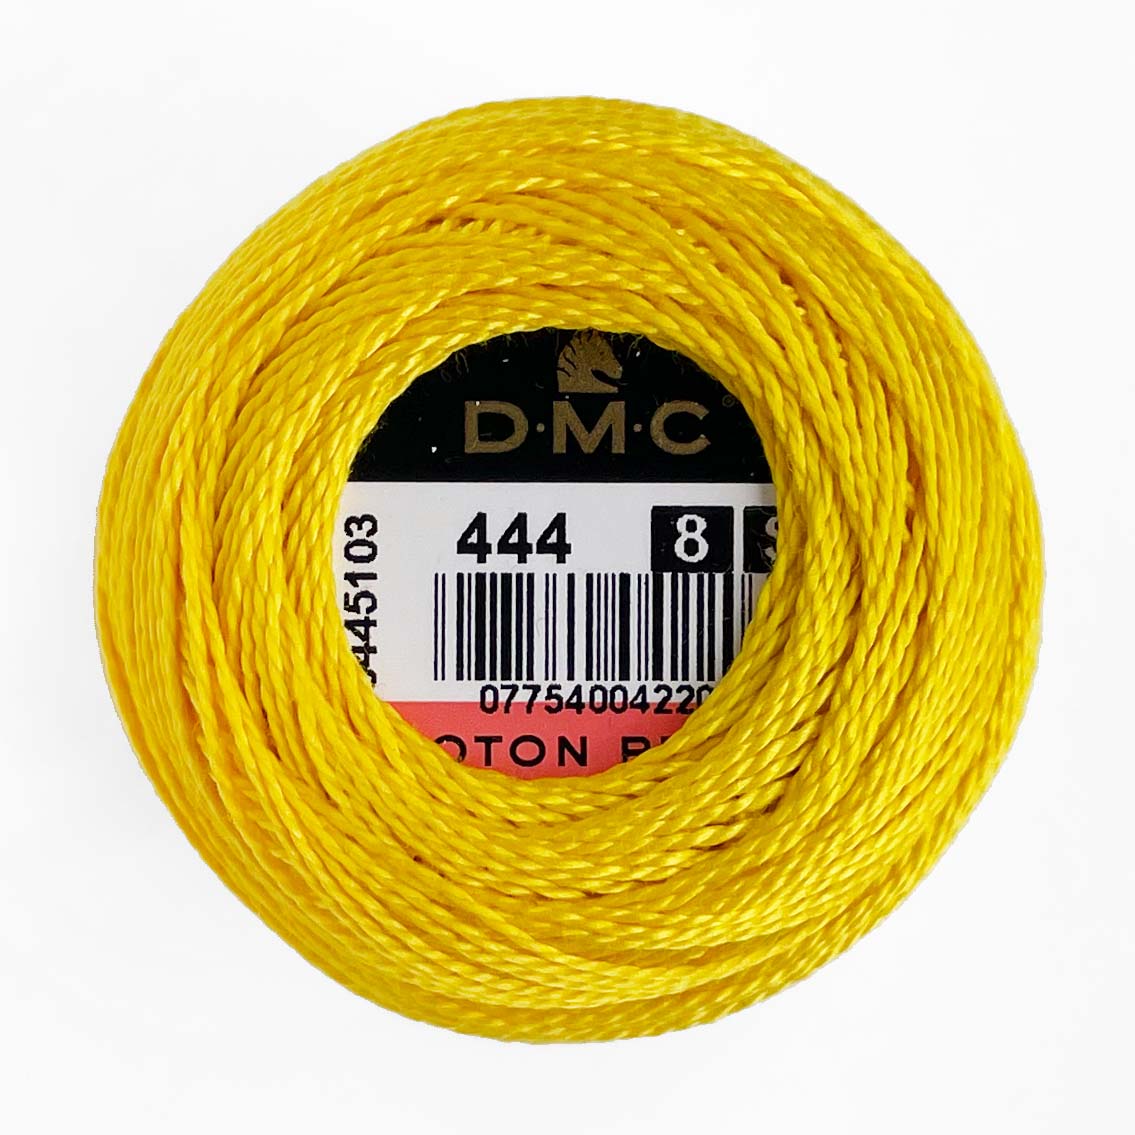 DMC 444: Dark Lemon (size 8 perle cotton) - Maydel